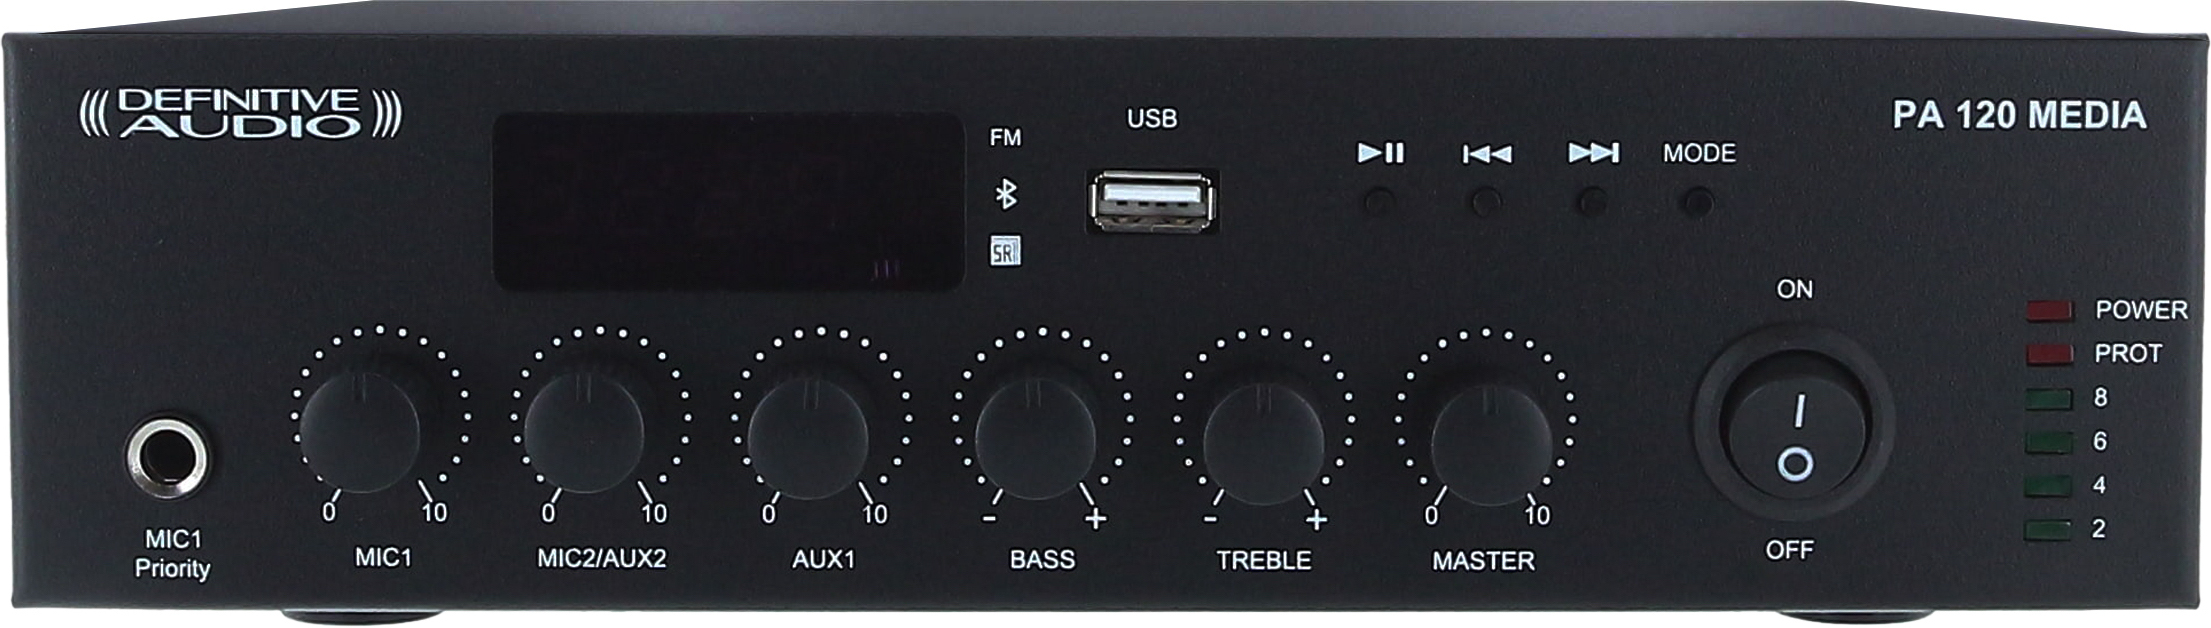 Definitive Audio Pa 120 Media - Multiple channels power amplifier - Main picture